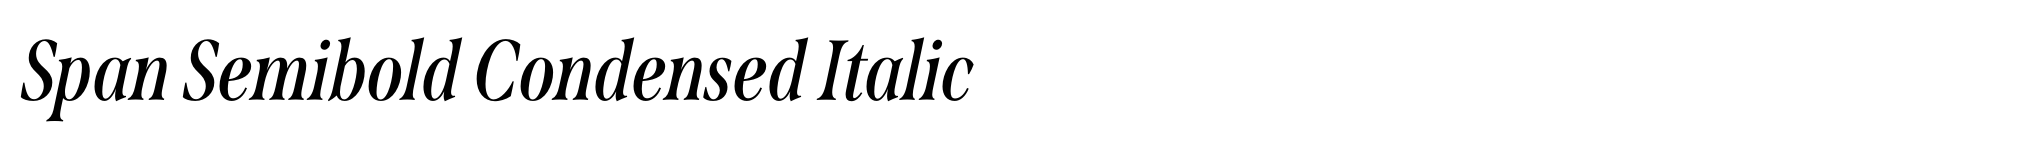 Span Semibold Condensed Italic image